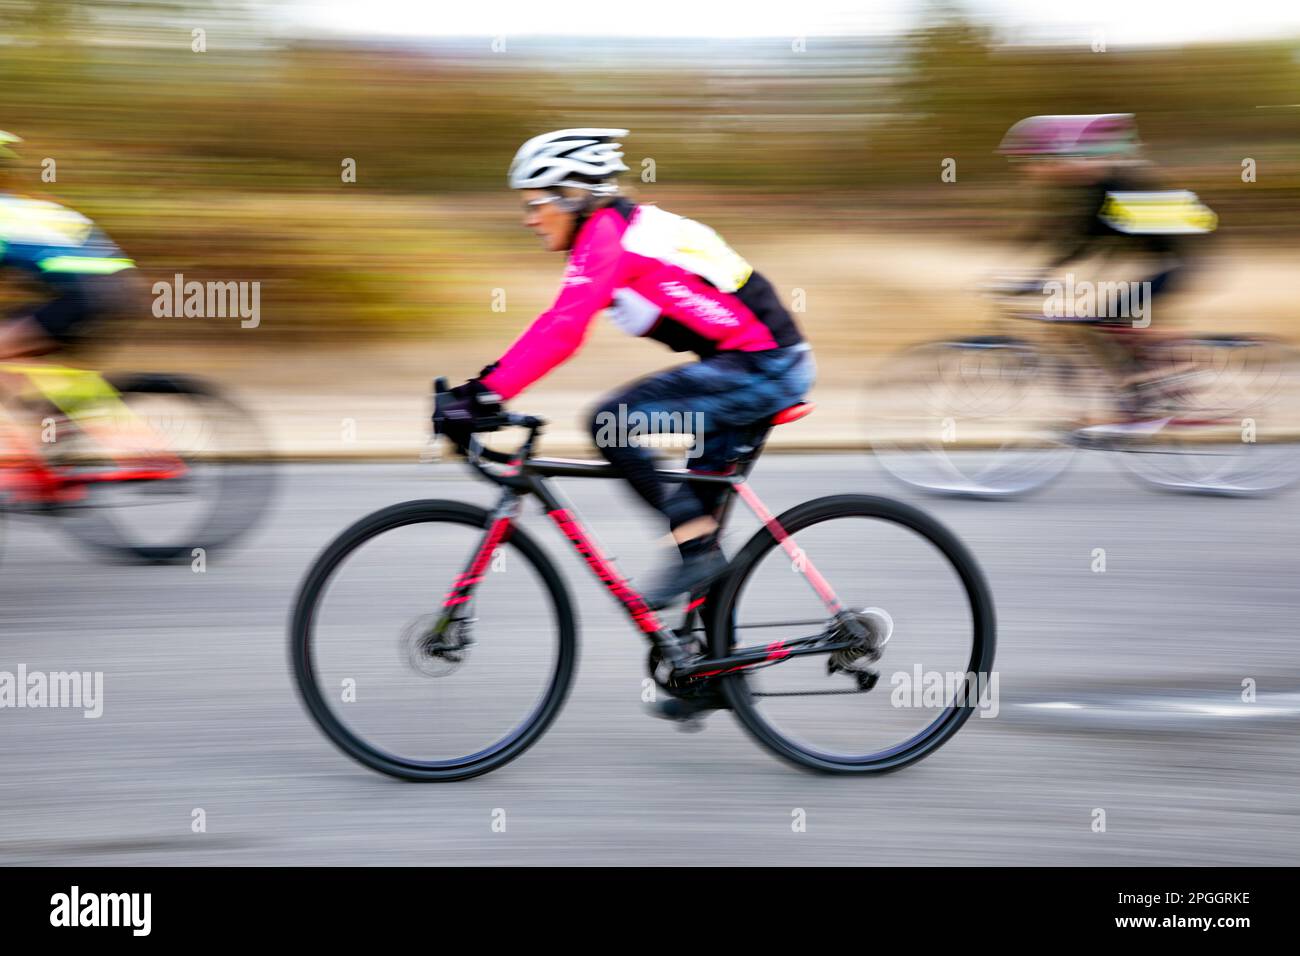 WA24050-00....Washington - Senior citizen Vicky Spring (69) compeating in a cyclocross race in Western Washington. Stock Photo